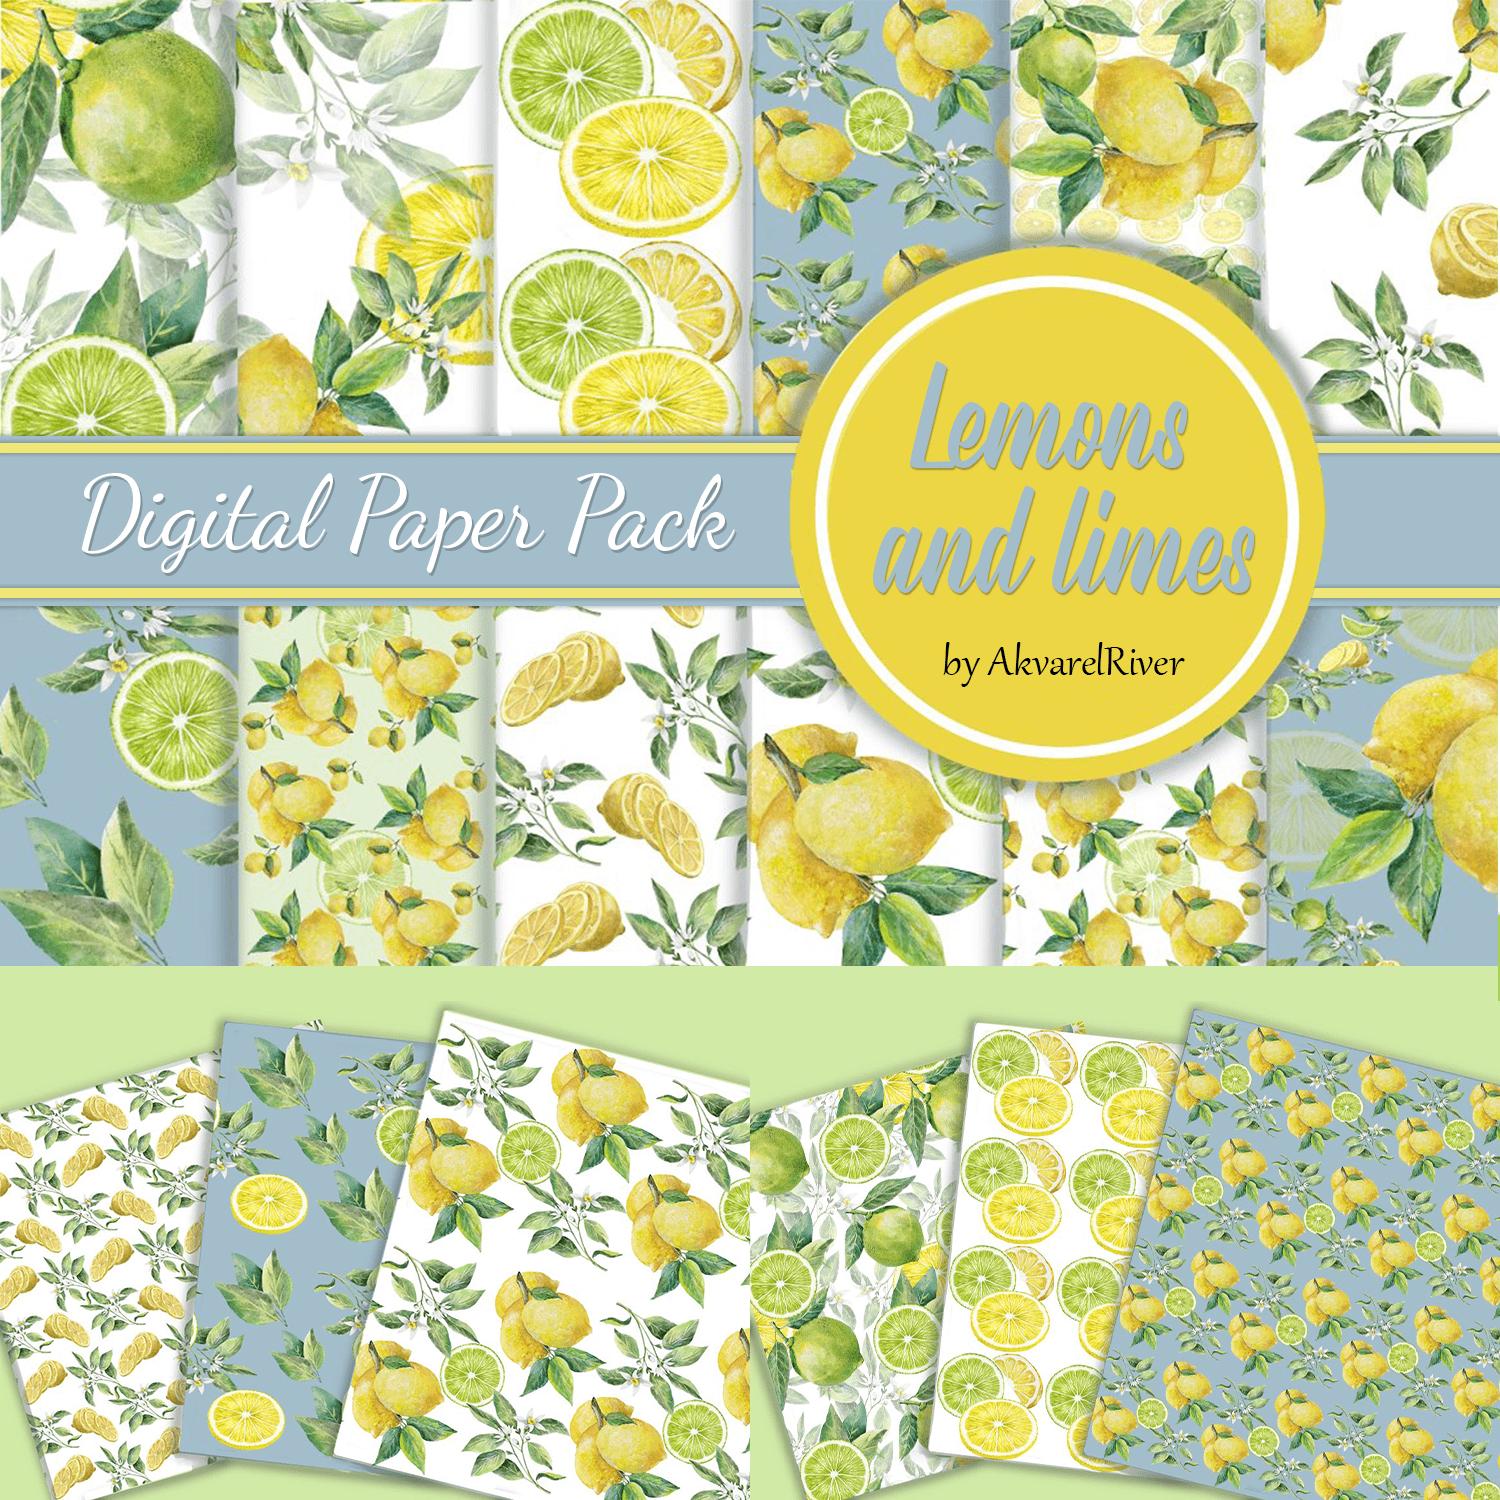 Lemons and limes Digital Paper Pack.